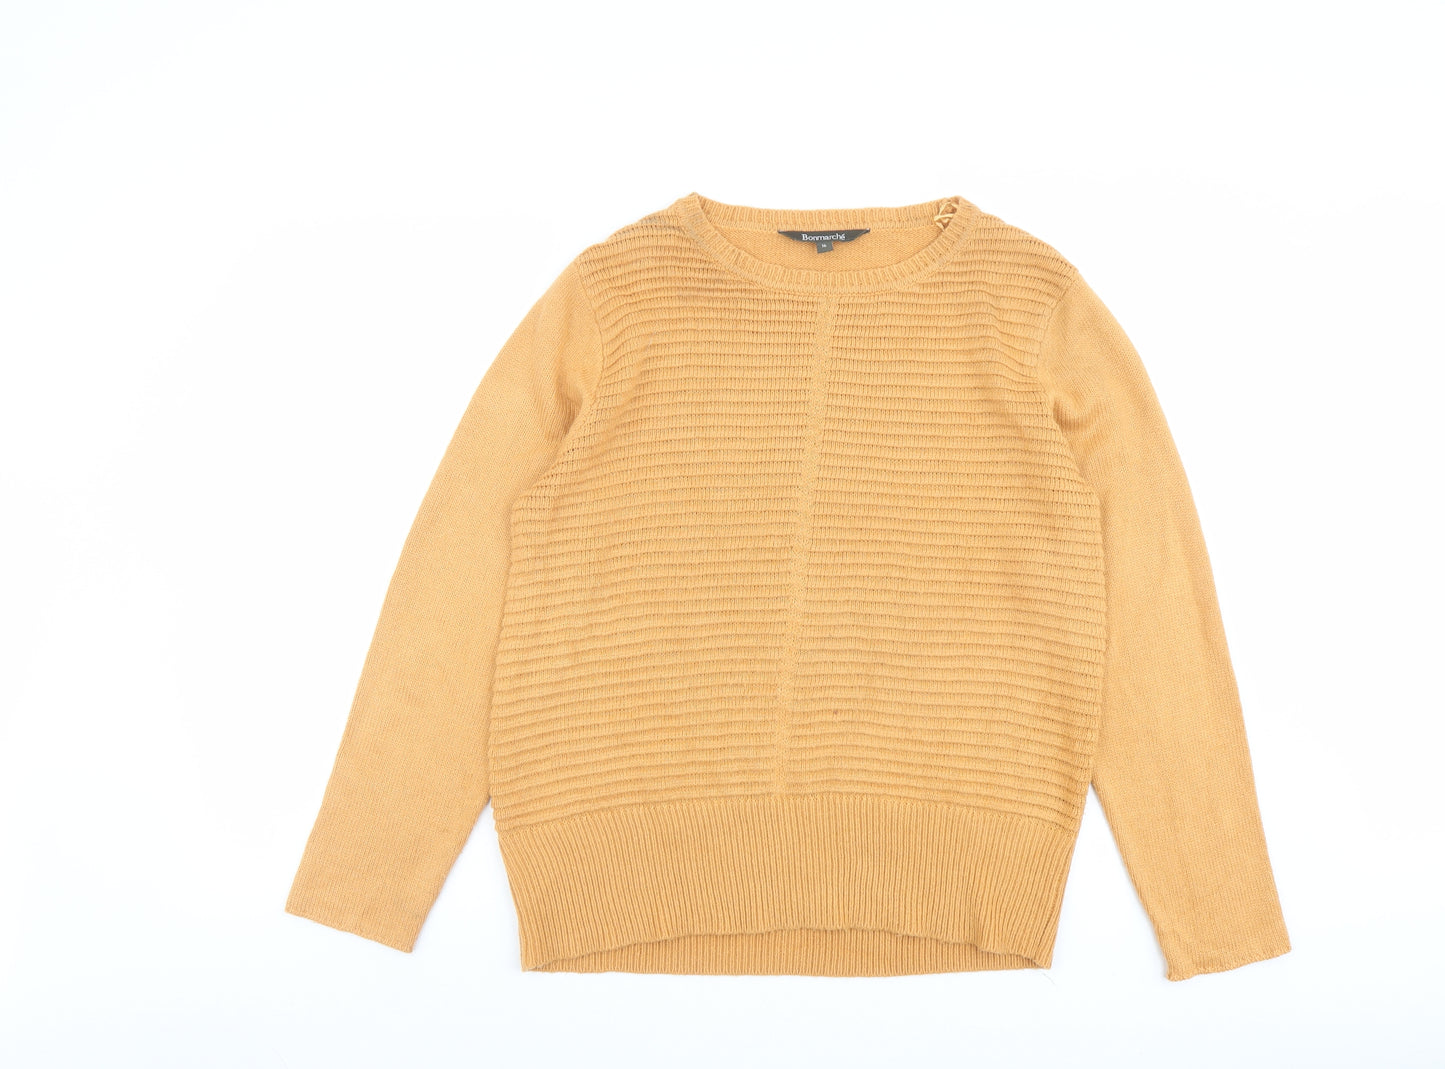 Bonmarché Womens Orange Round Neck Acrylic Pullover Jumper Size 16